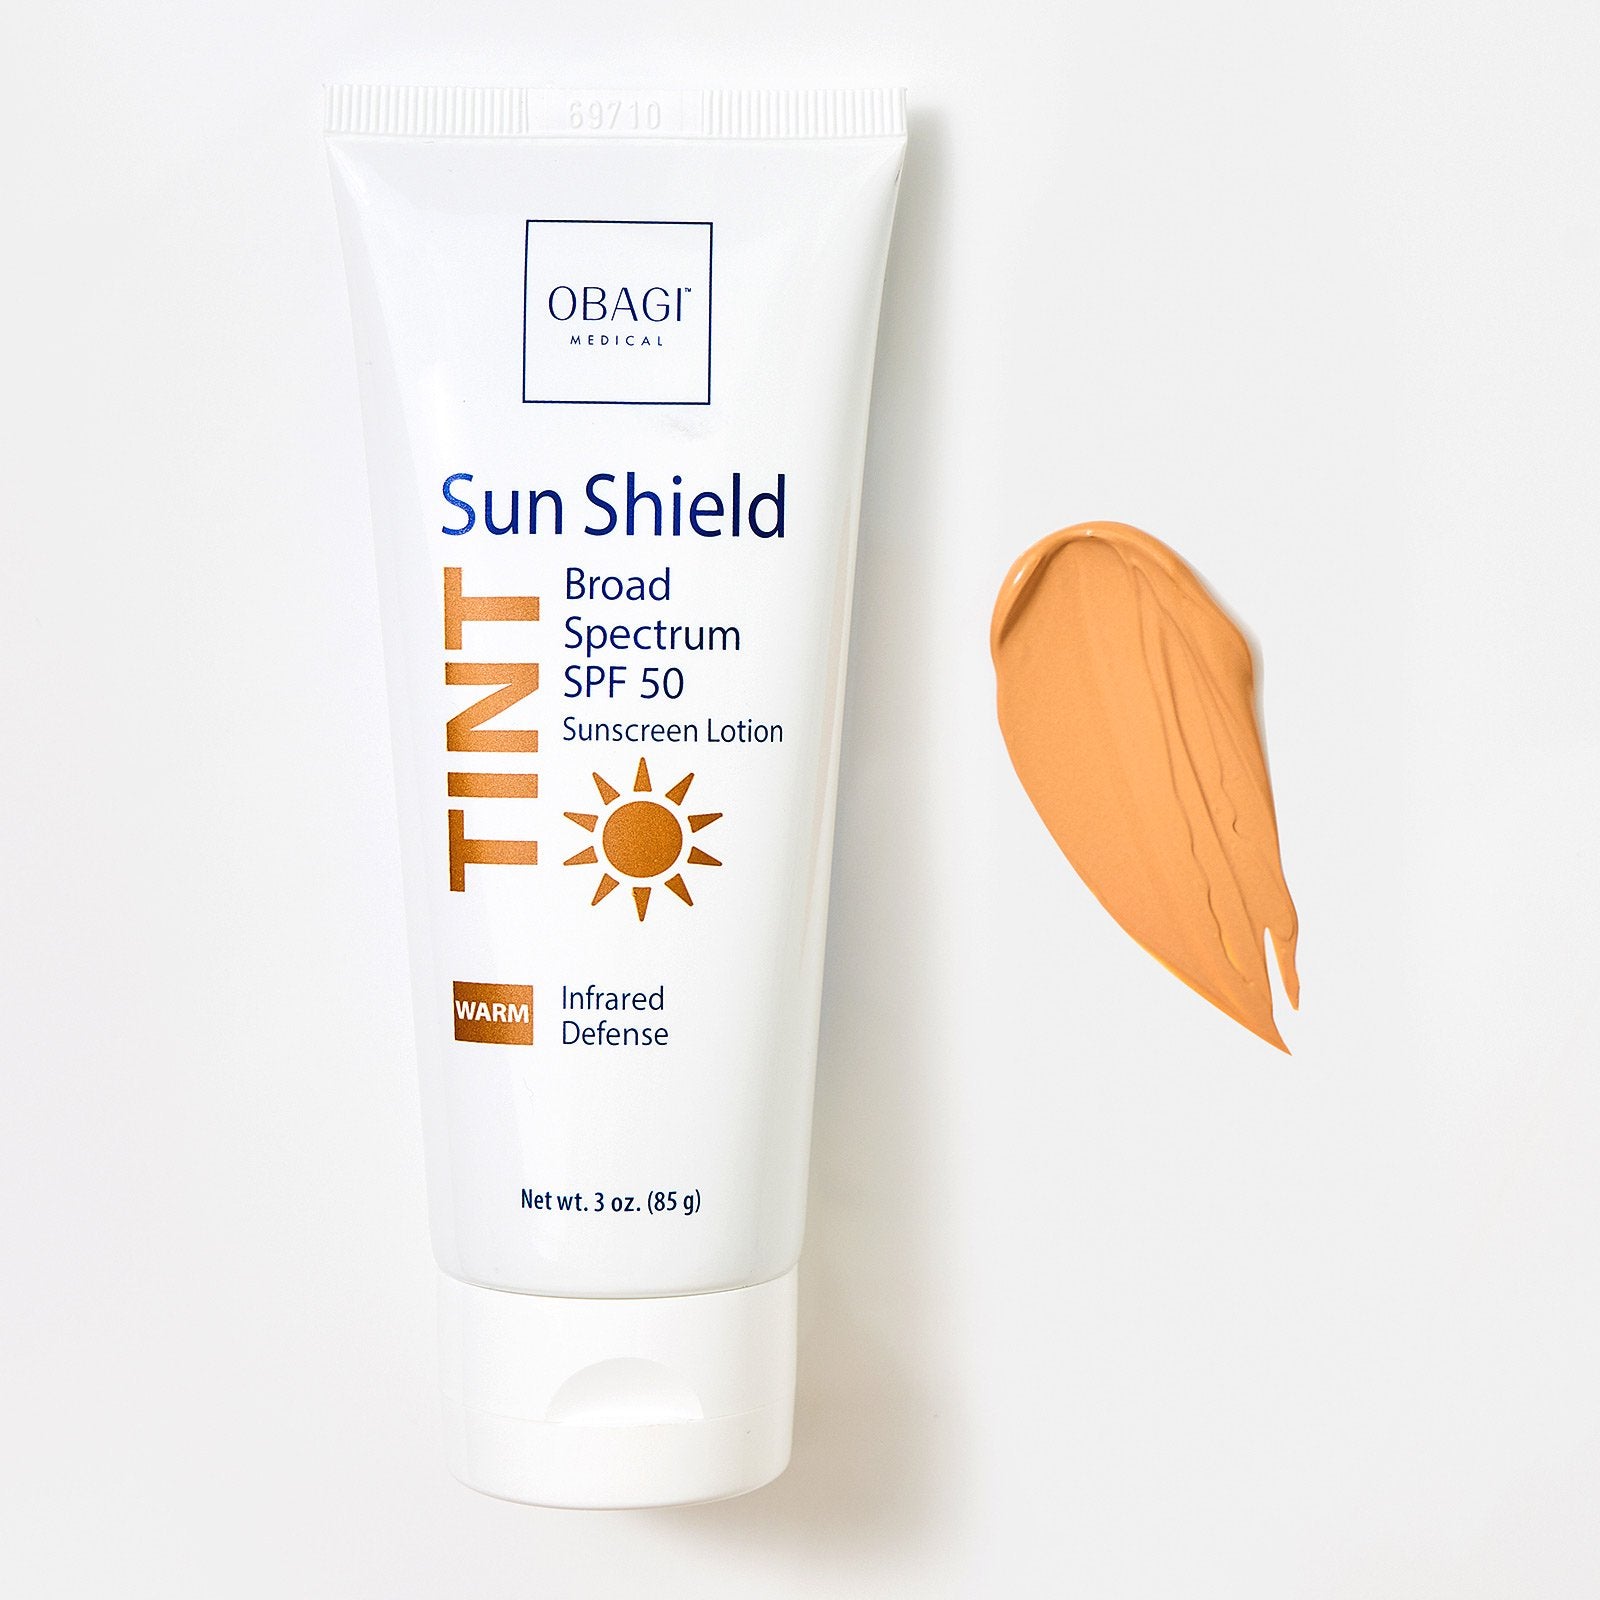 Obagi Sun Shield Tint de amplio espectro SPF 50 Warm (3 oz)